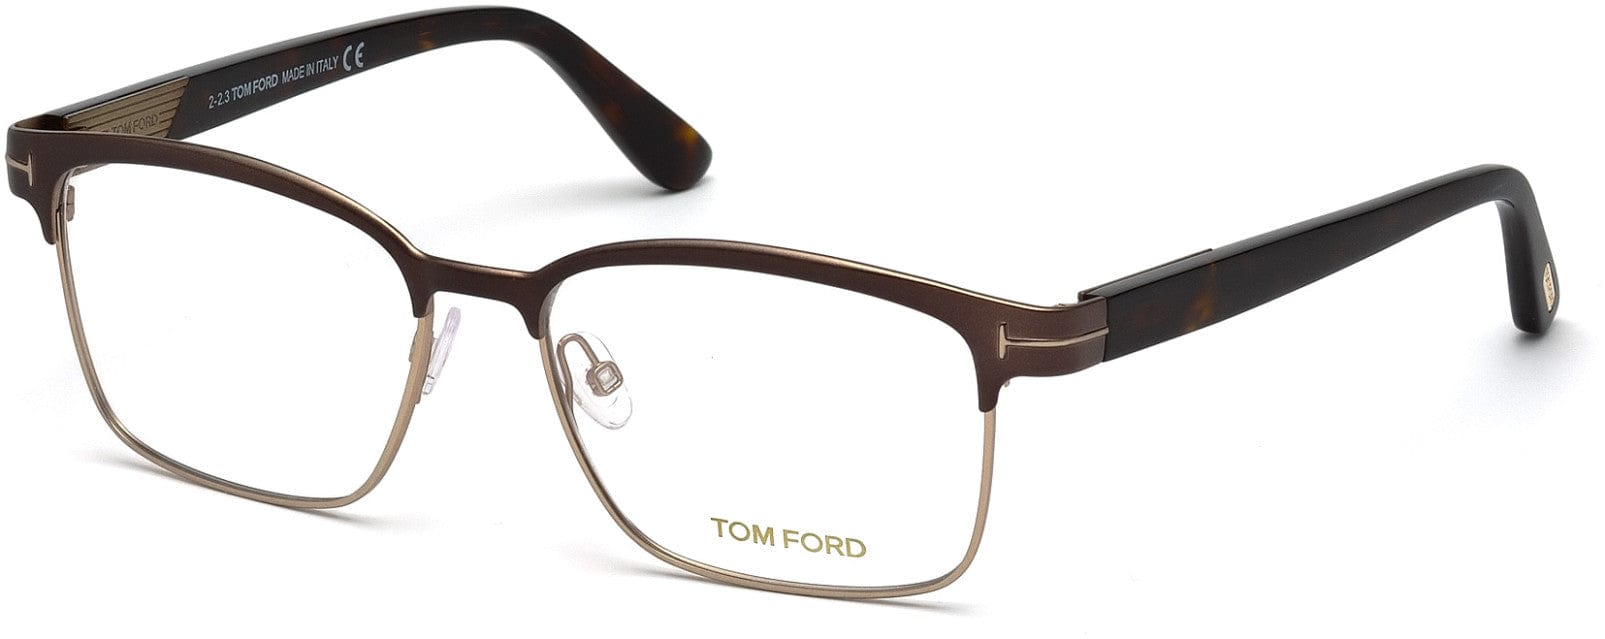 Tom Ford FT5323 Geometric Eyeglasses 048-048 - Matte Brown, Matte Bronze